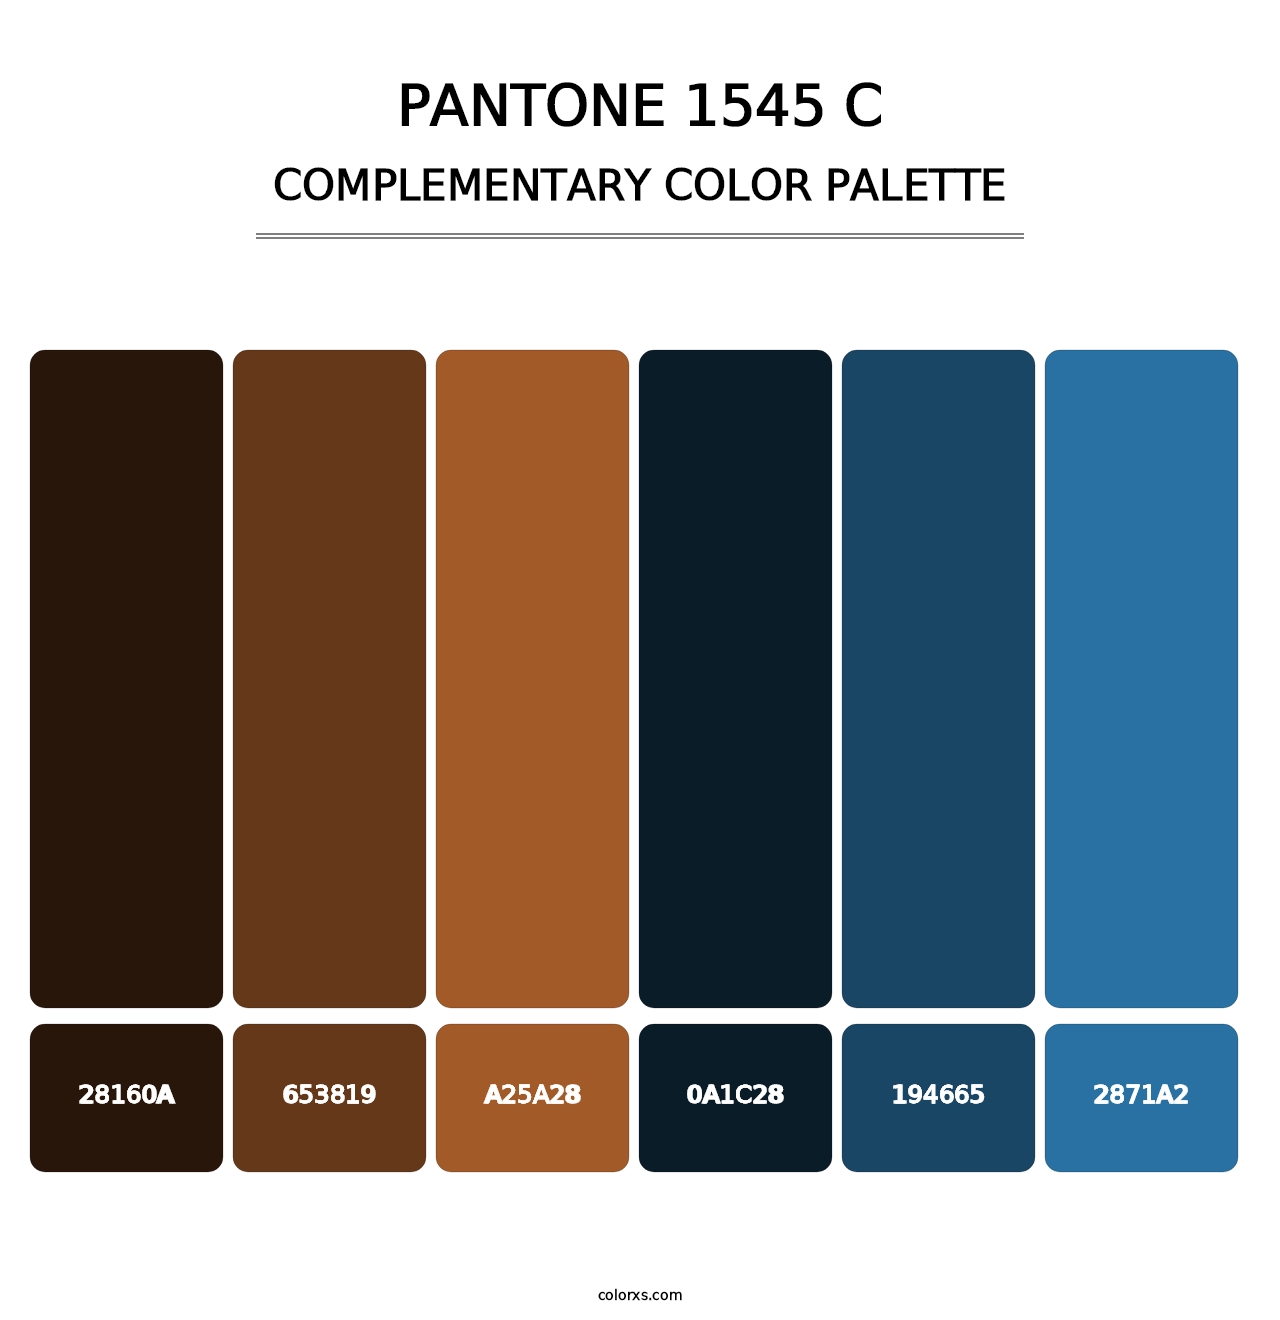 PANTONE 1545 C - Complementary Color Palette